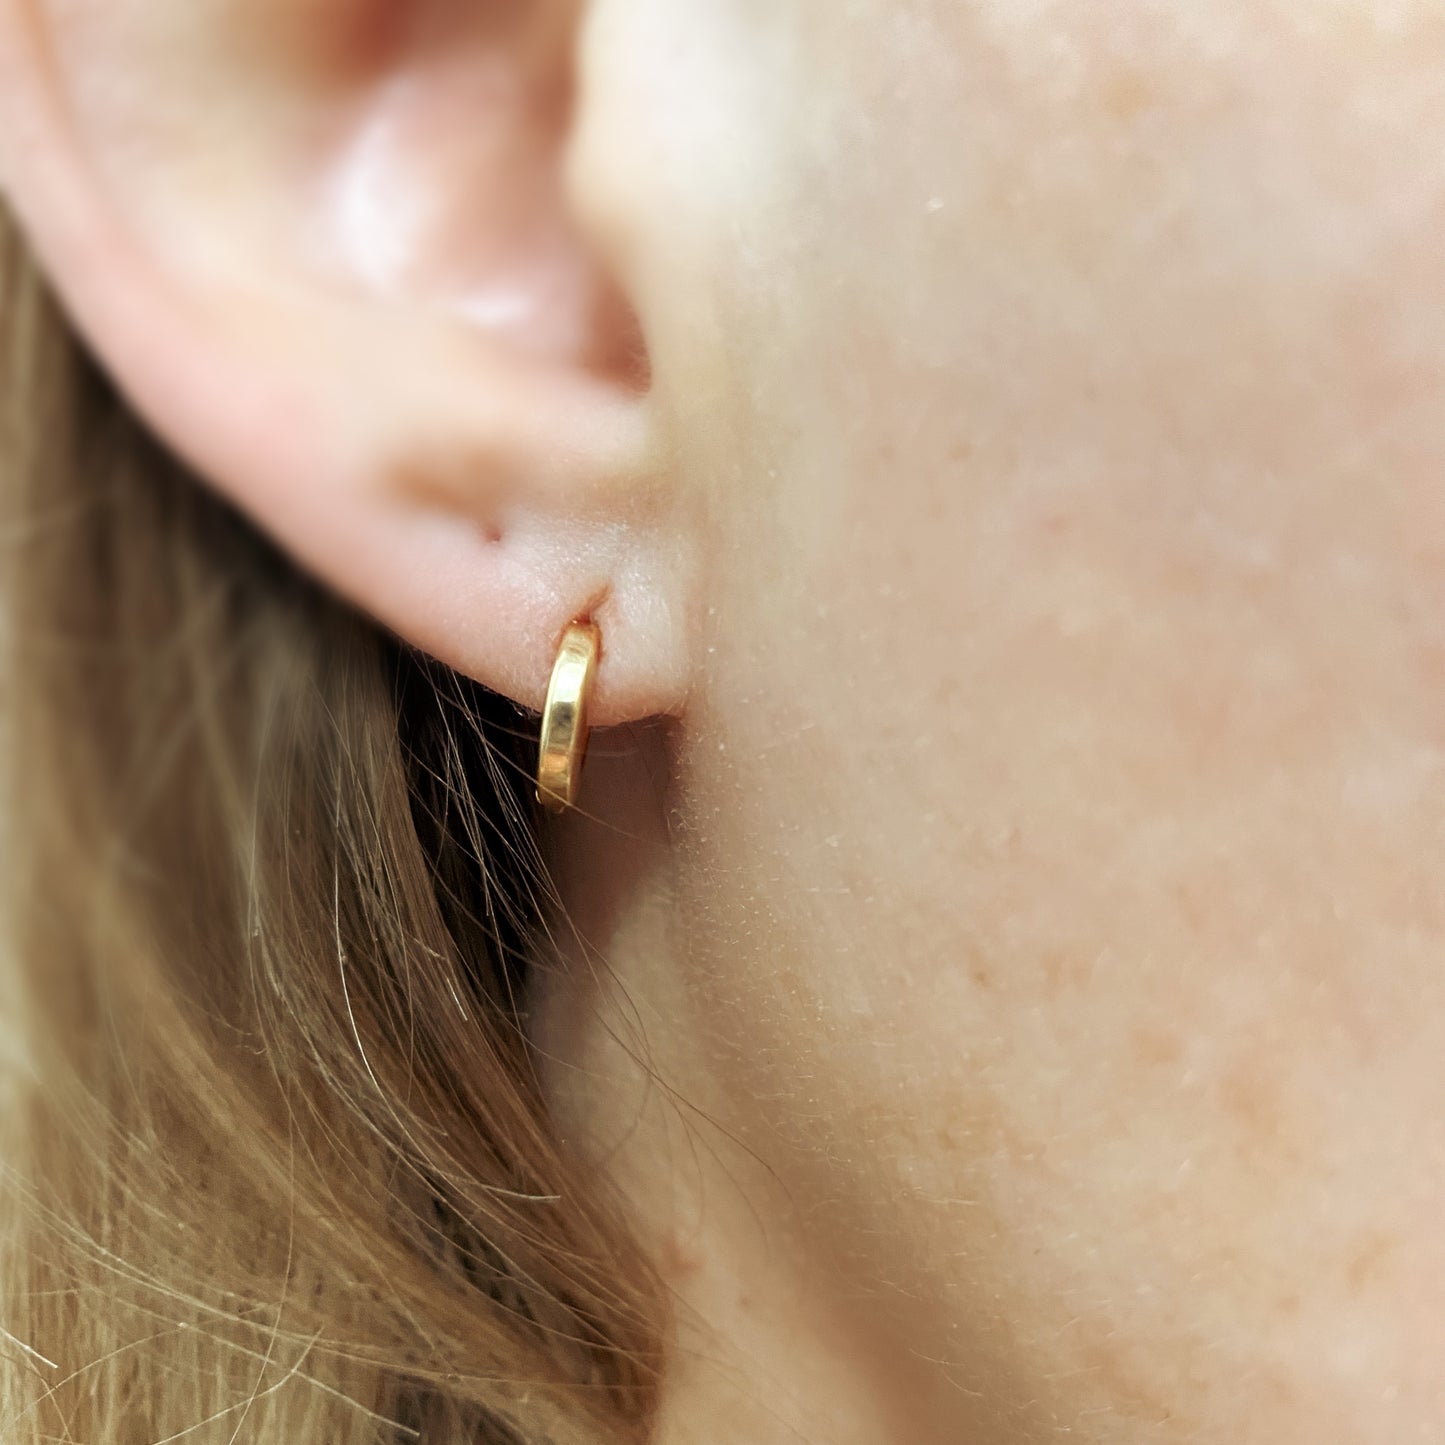 GoldFi 18k Gold Filled 1.0mm Clicker Hoop Earring